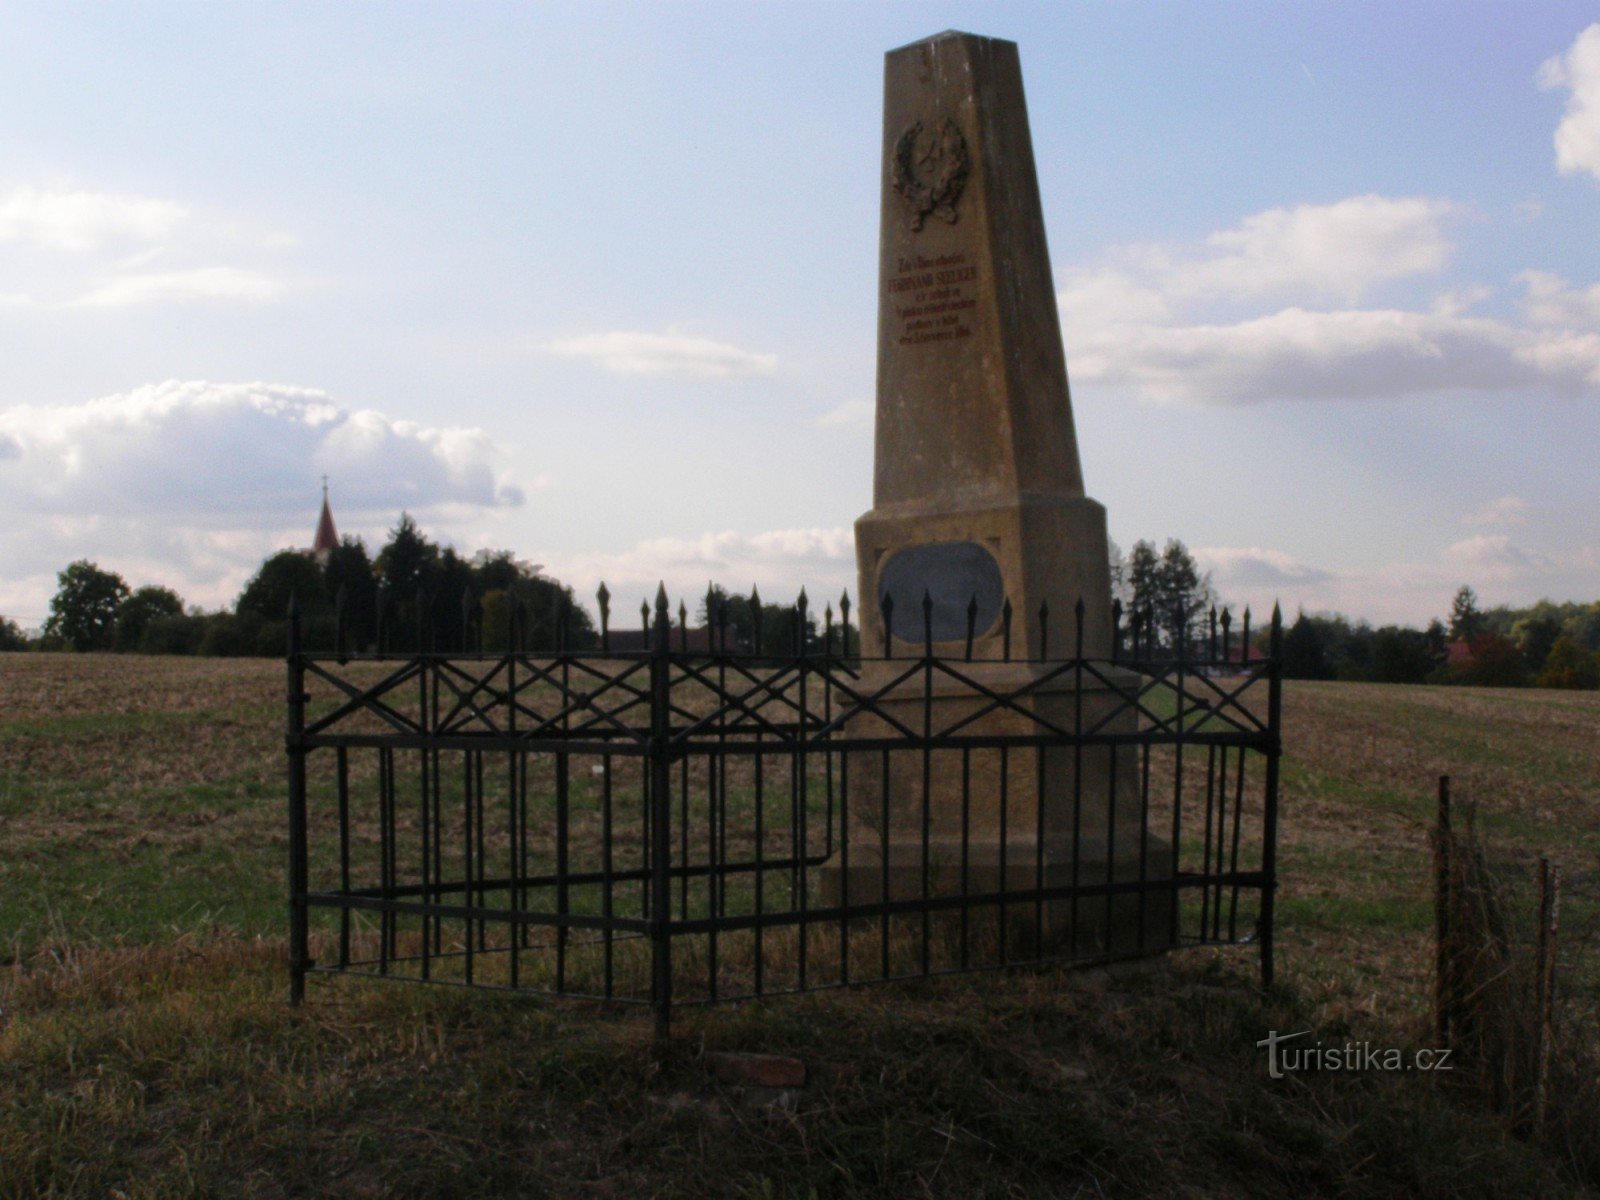 Battlefield on Chlum - monumenten op de kruising van de wegen naar Nedělišť